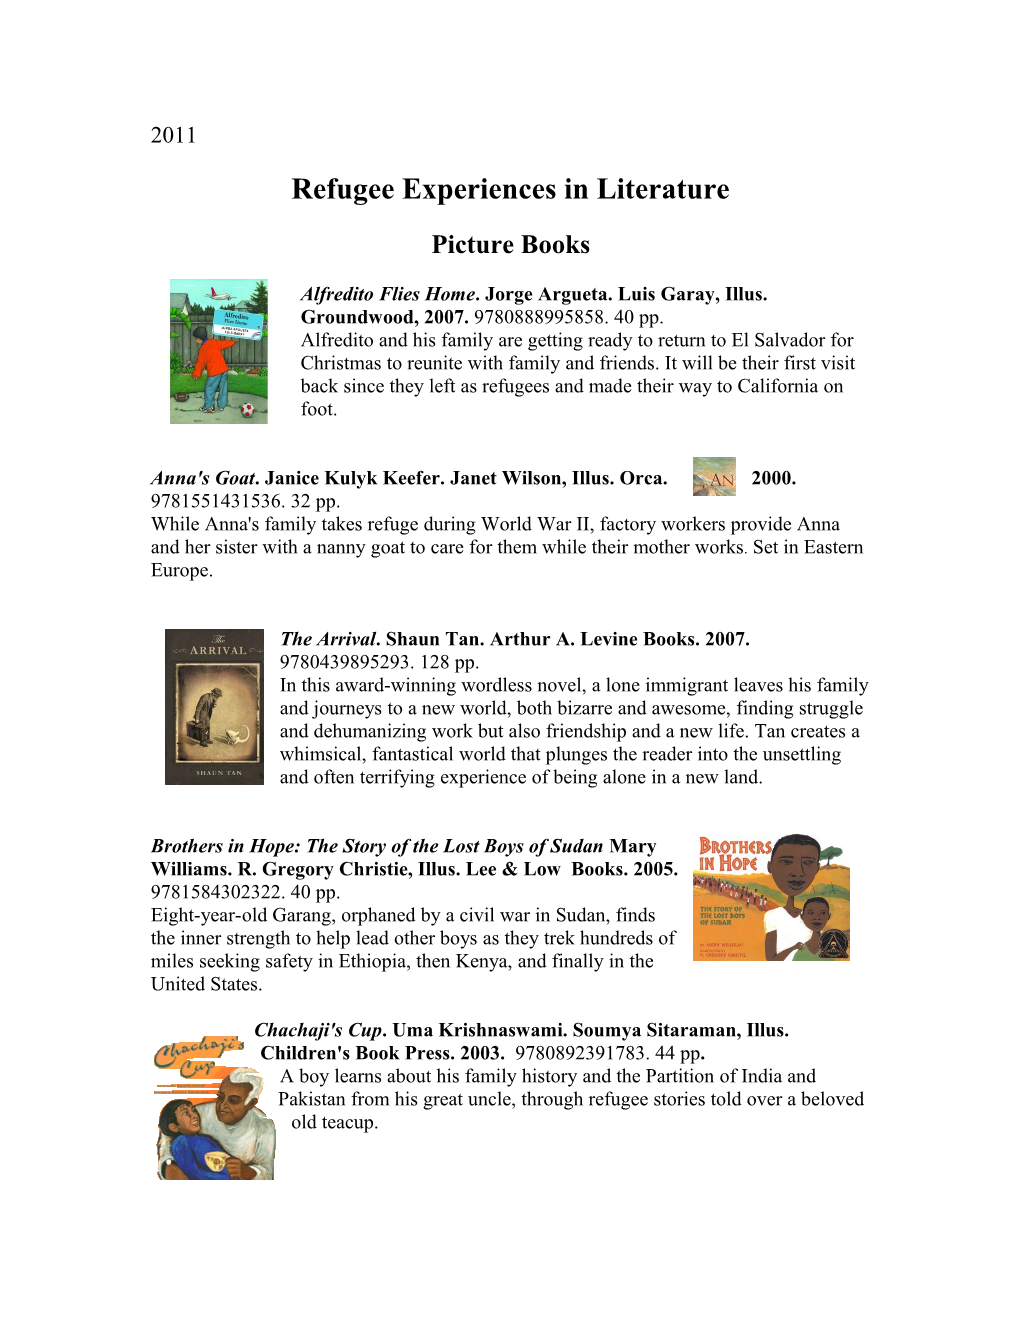 Refugee Experiences in Literature